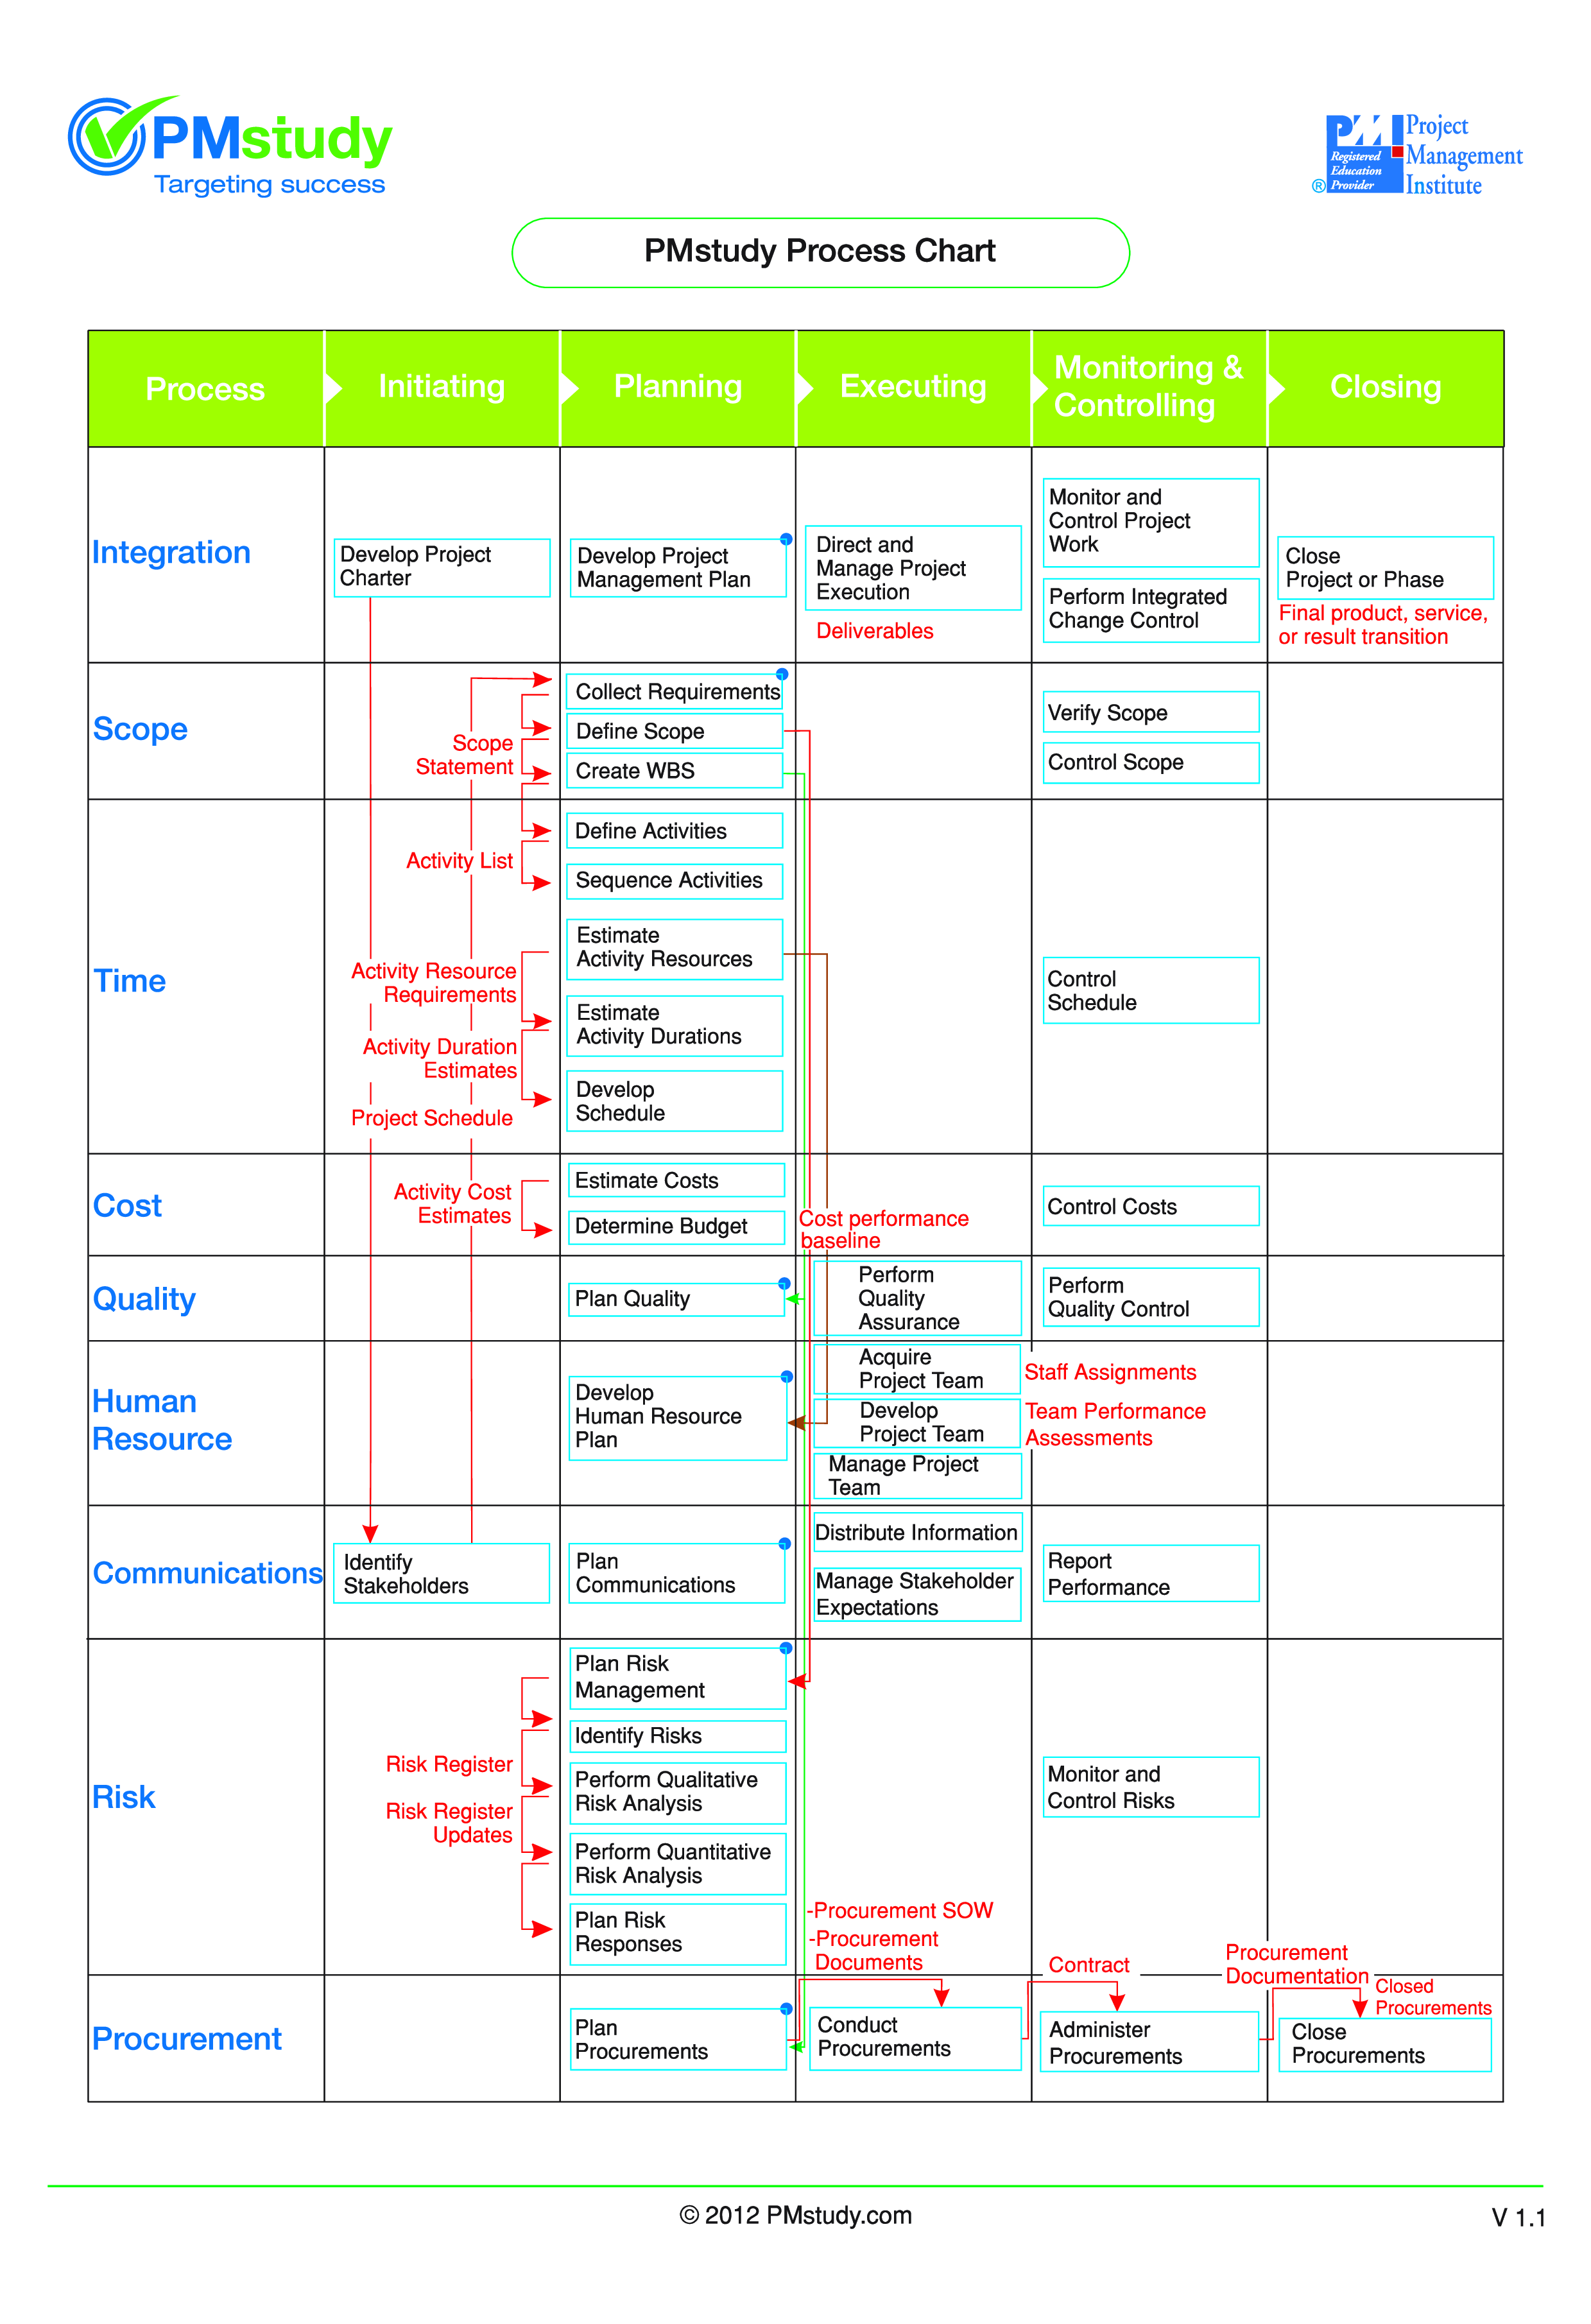 Process Chart sample main image